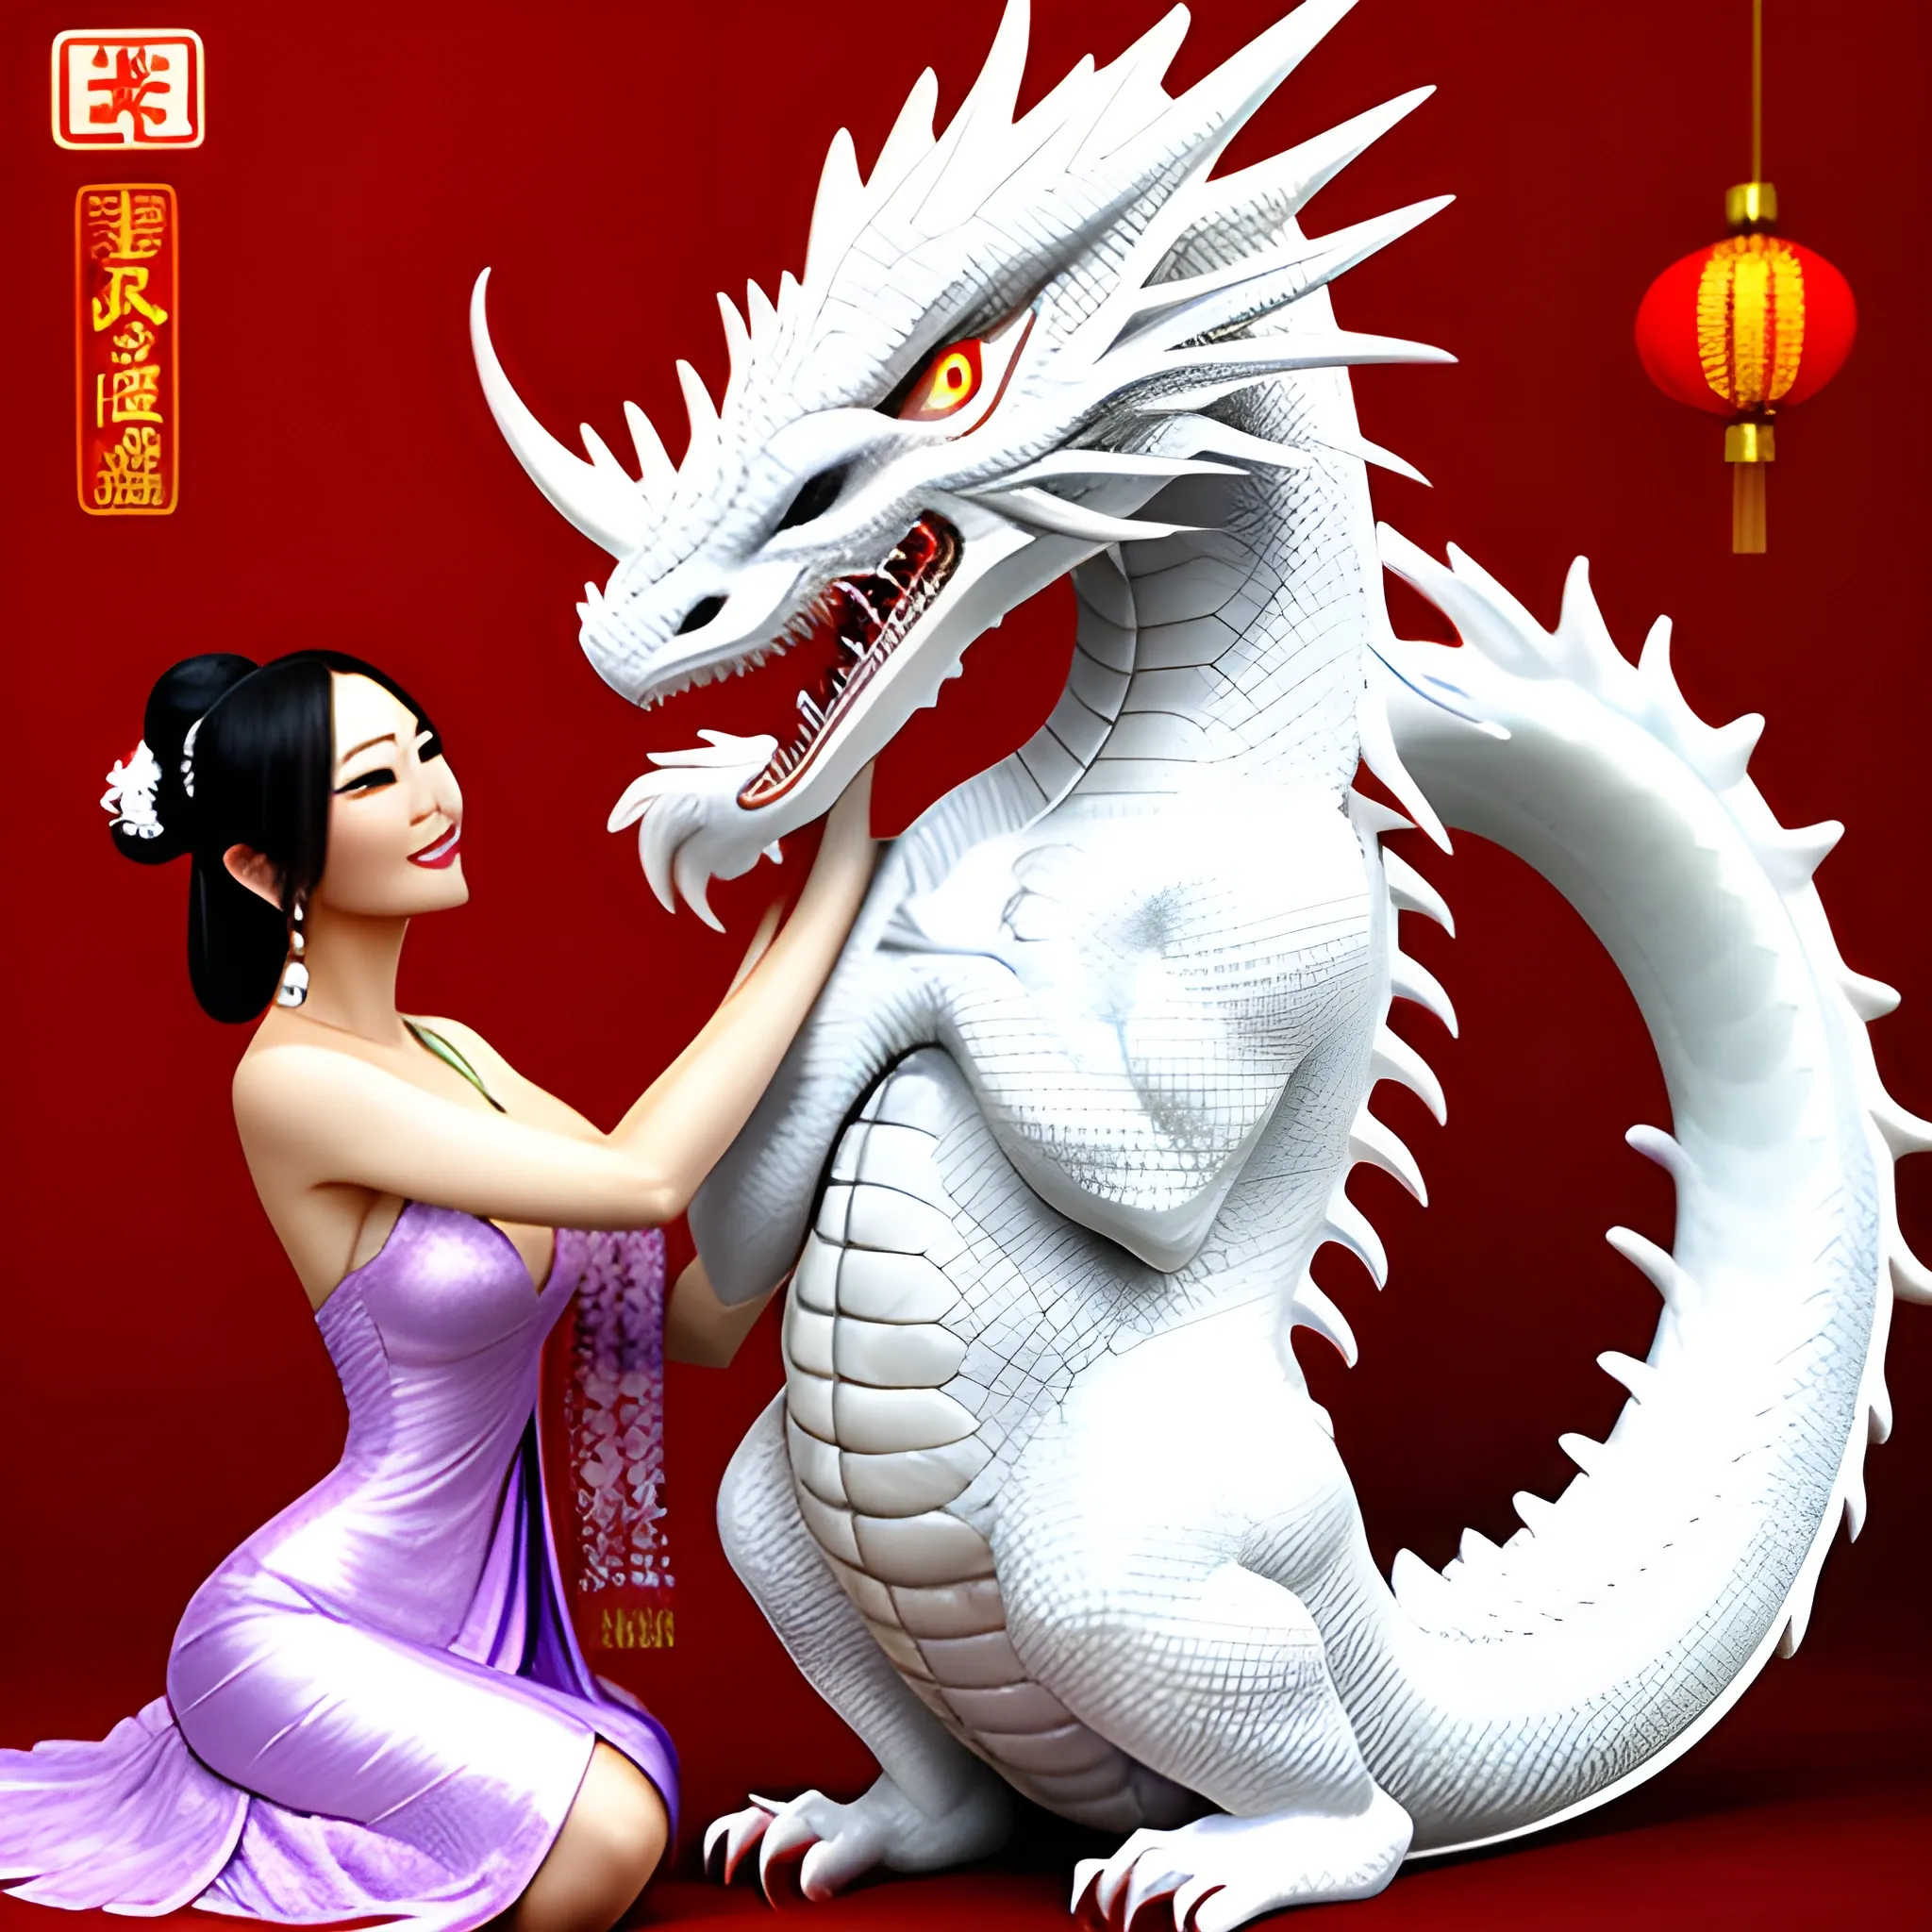 Chinese beauty hugs a cute little white dragon